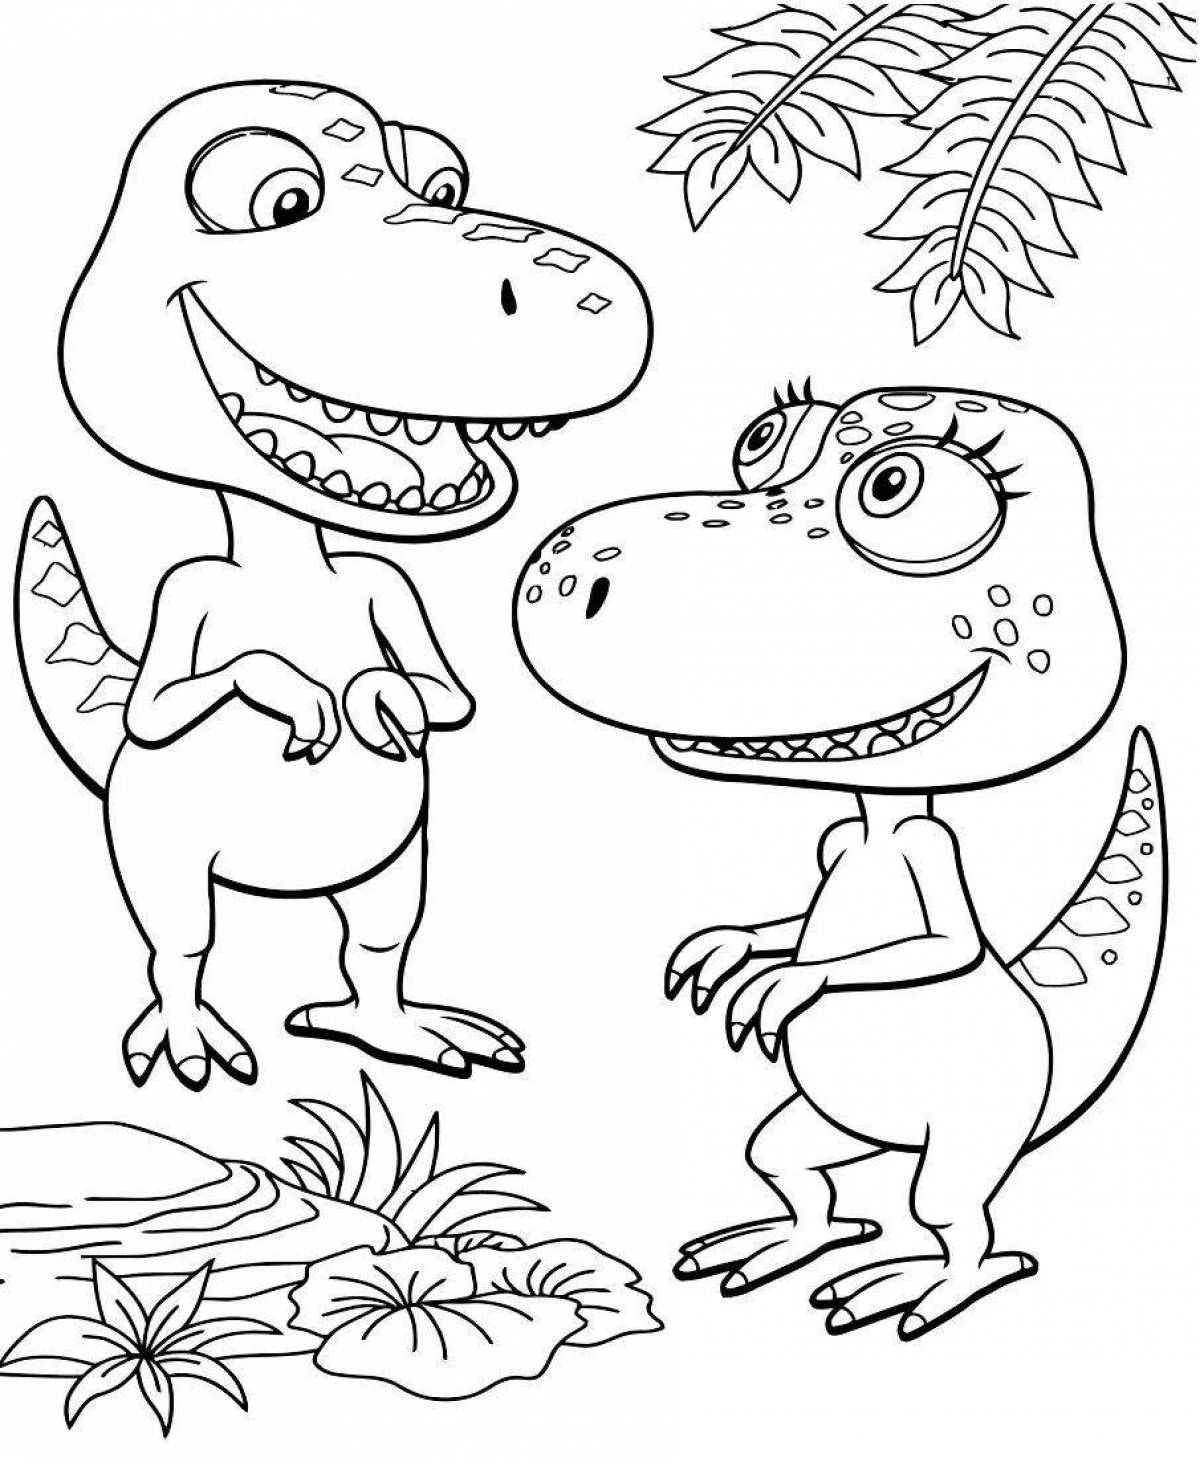 Dinosaur fantasy coloring book for girls